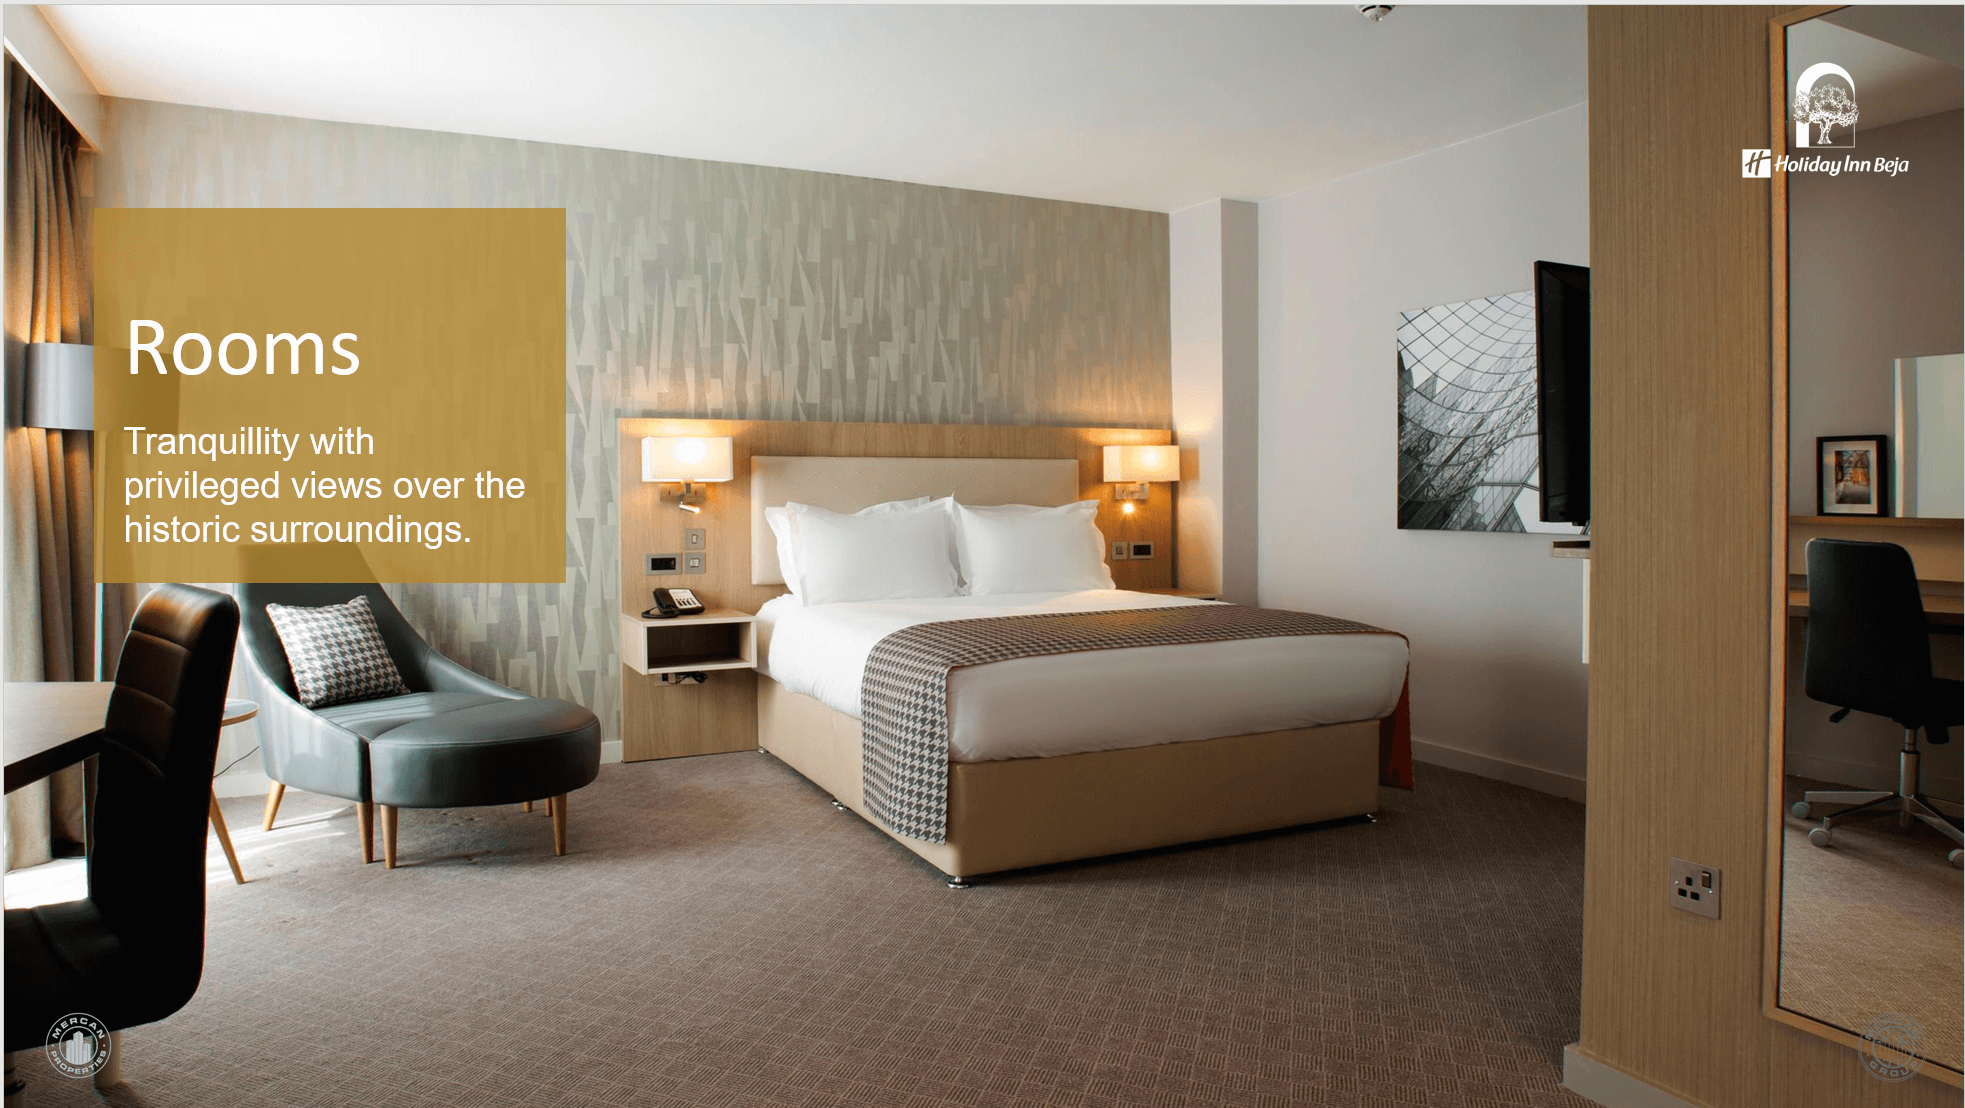 Portugal Golden Visa - Holiday Inn Beja Rooms